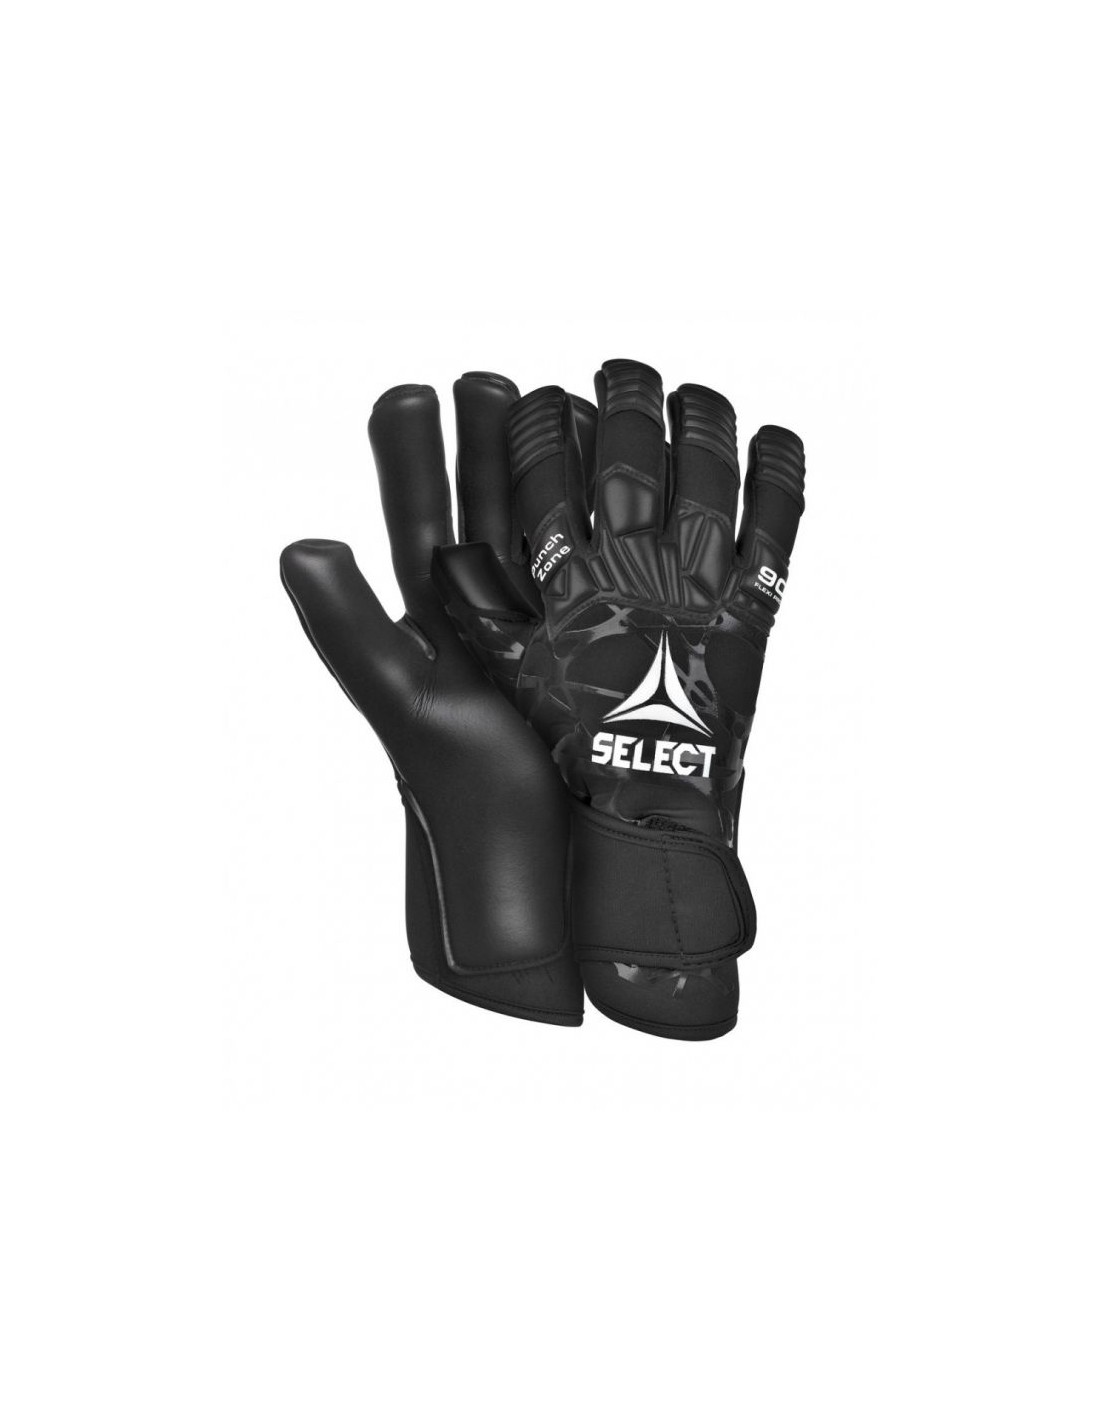 https://cdn.mybrand.shoes/536309-thickbox_default/select-90-2021-flexi-pro-negative-cut-t26-16832-goalkeeper-gloves.jpg